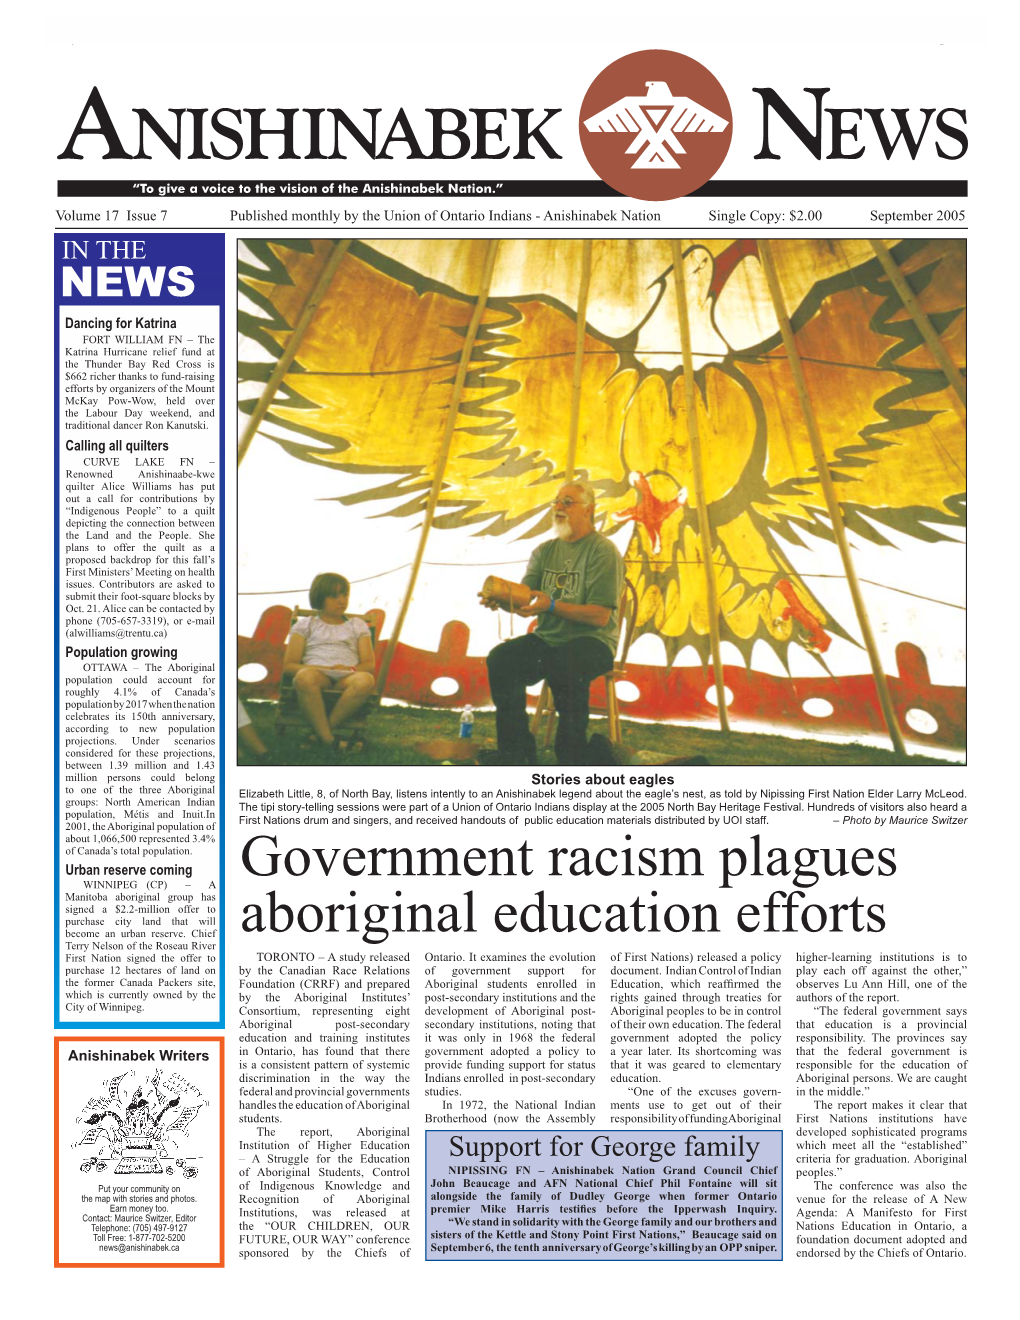 Government Racism Plagues Aboriginal Education Efforts